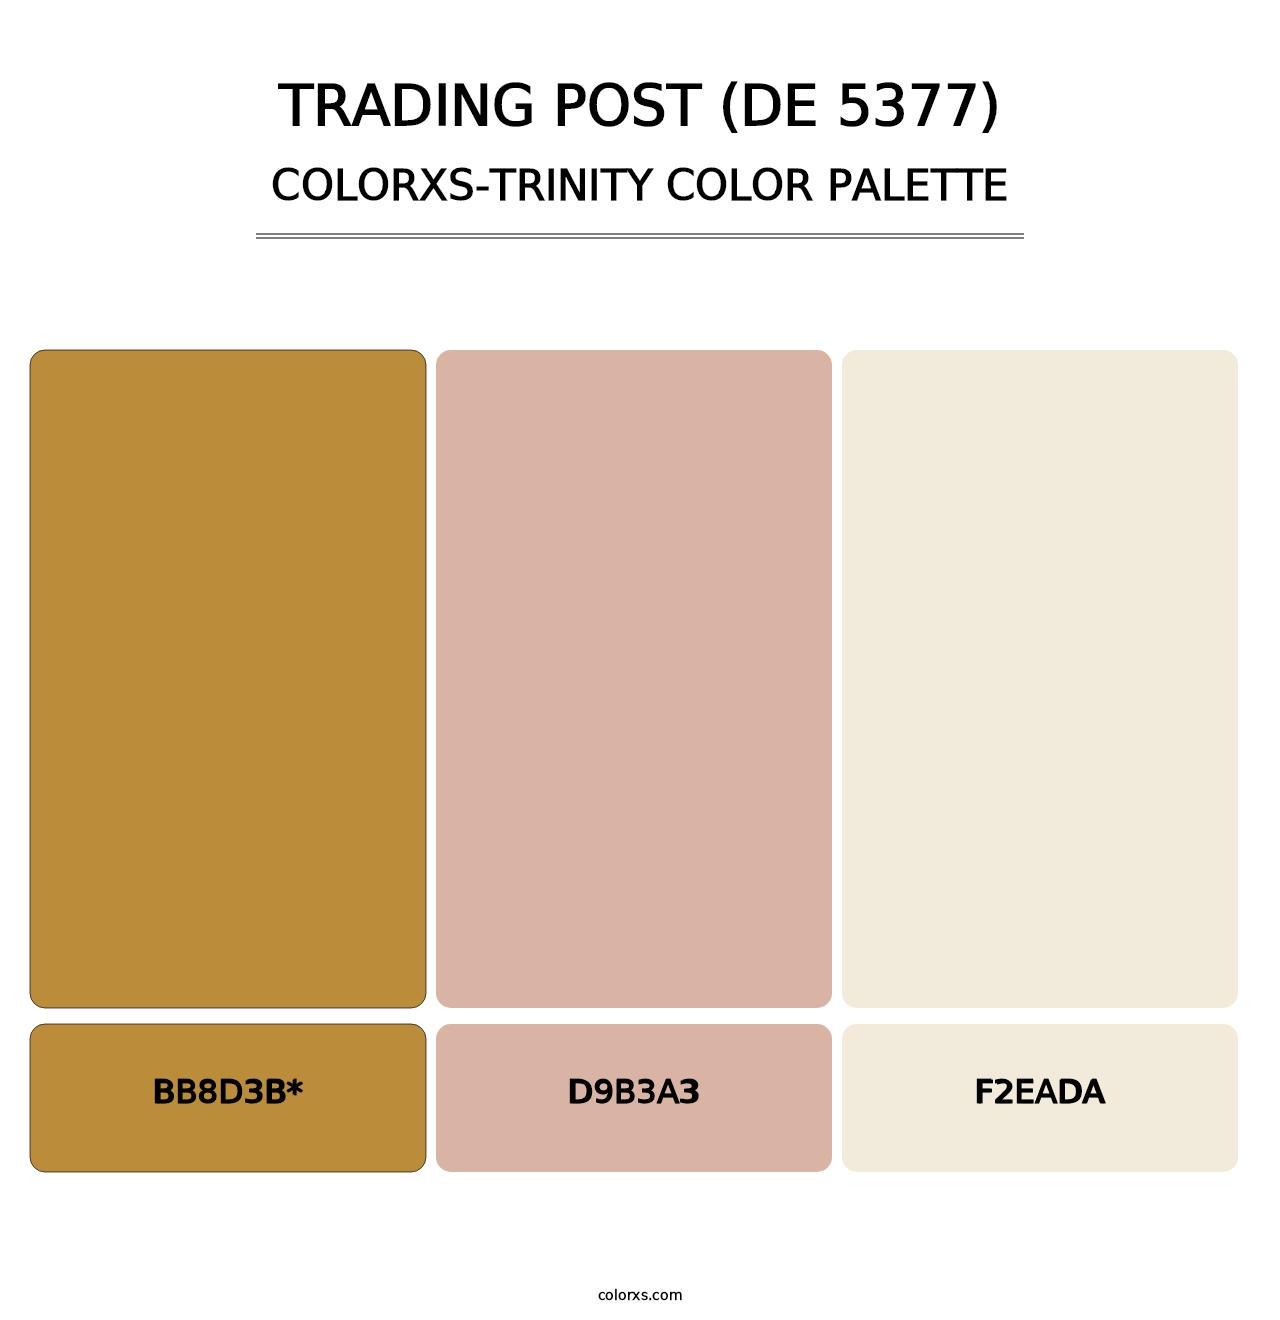 Trading Post (DE 5377) - Colorxs Trinity Palette